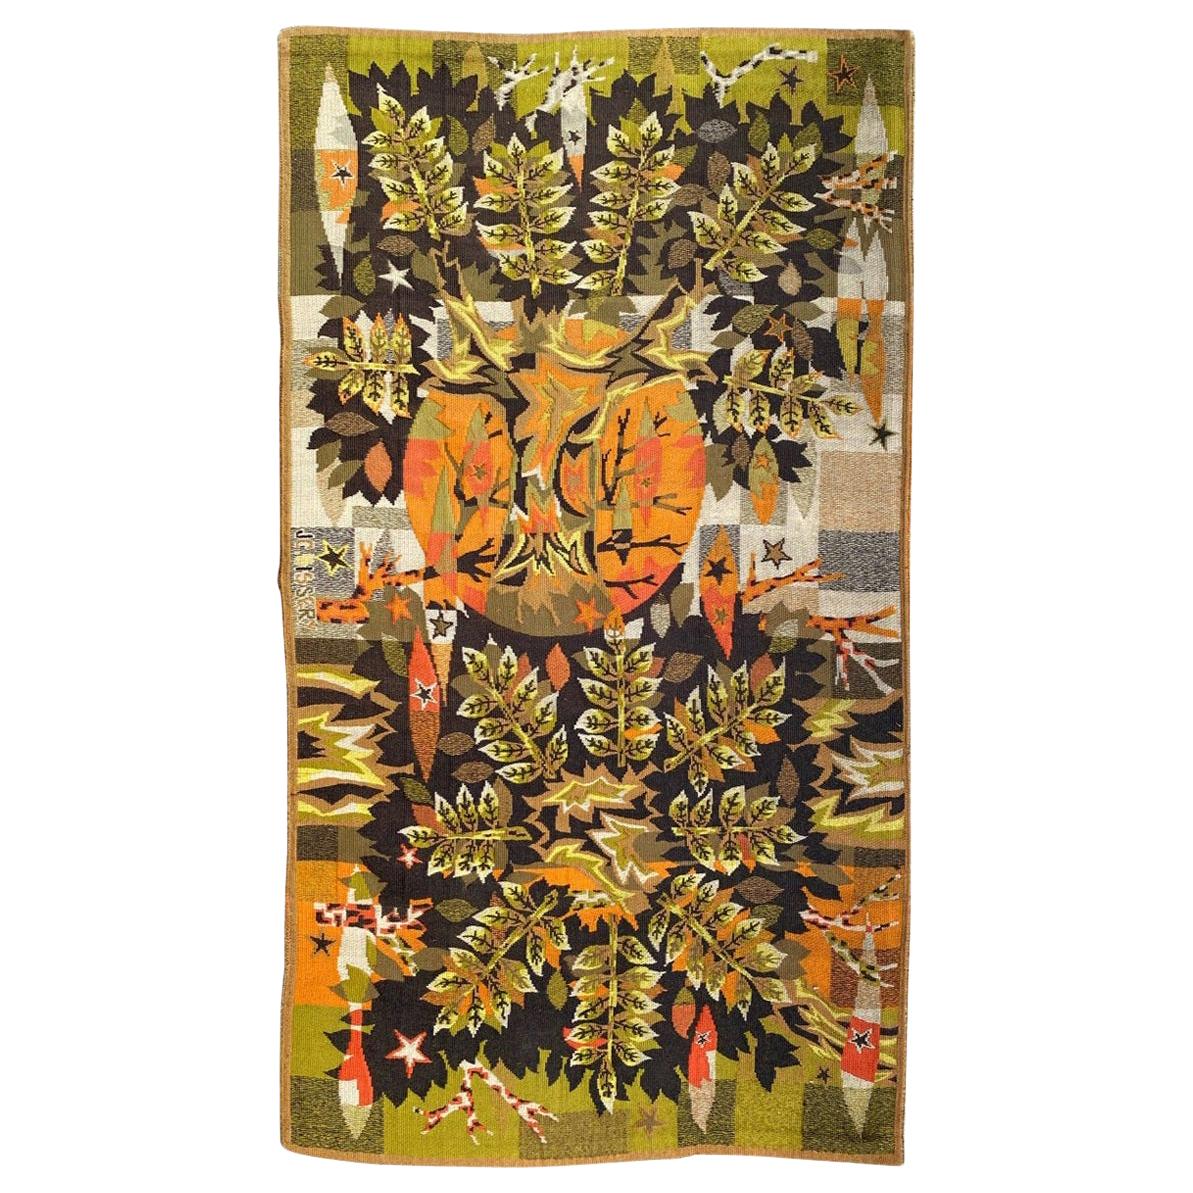 Bobyrug's Nice Vintage Jaquar Tapestry with a Modern Jean Claude Bissery Design (en anglais)